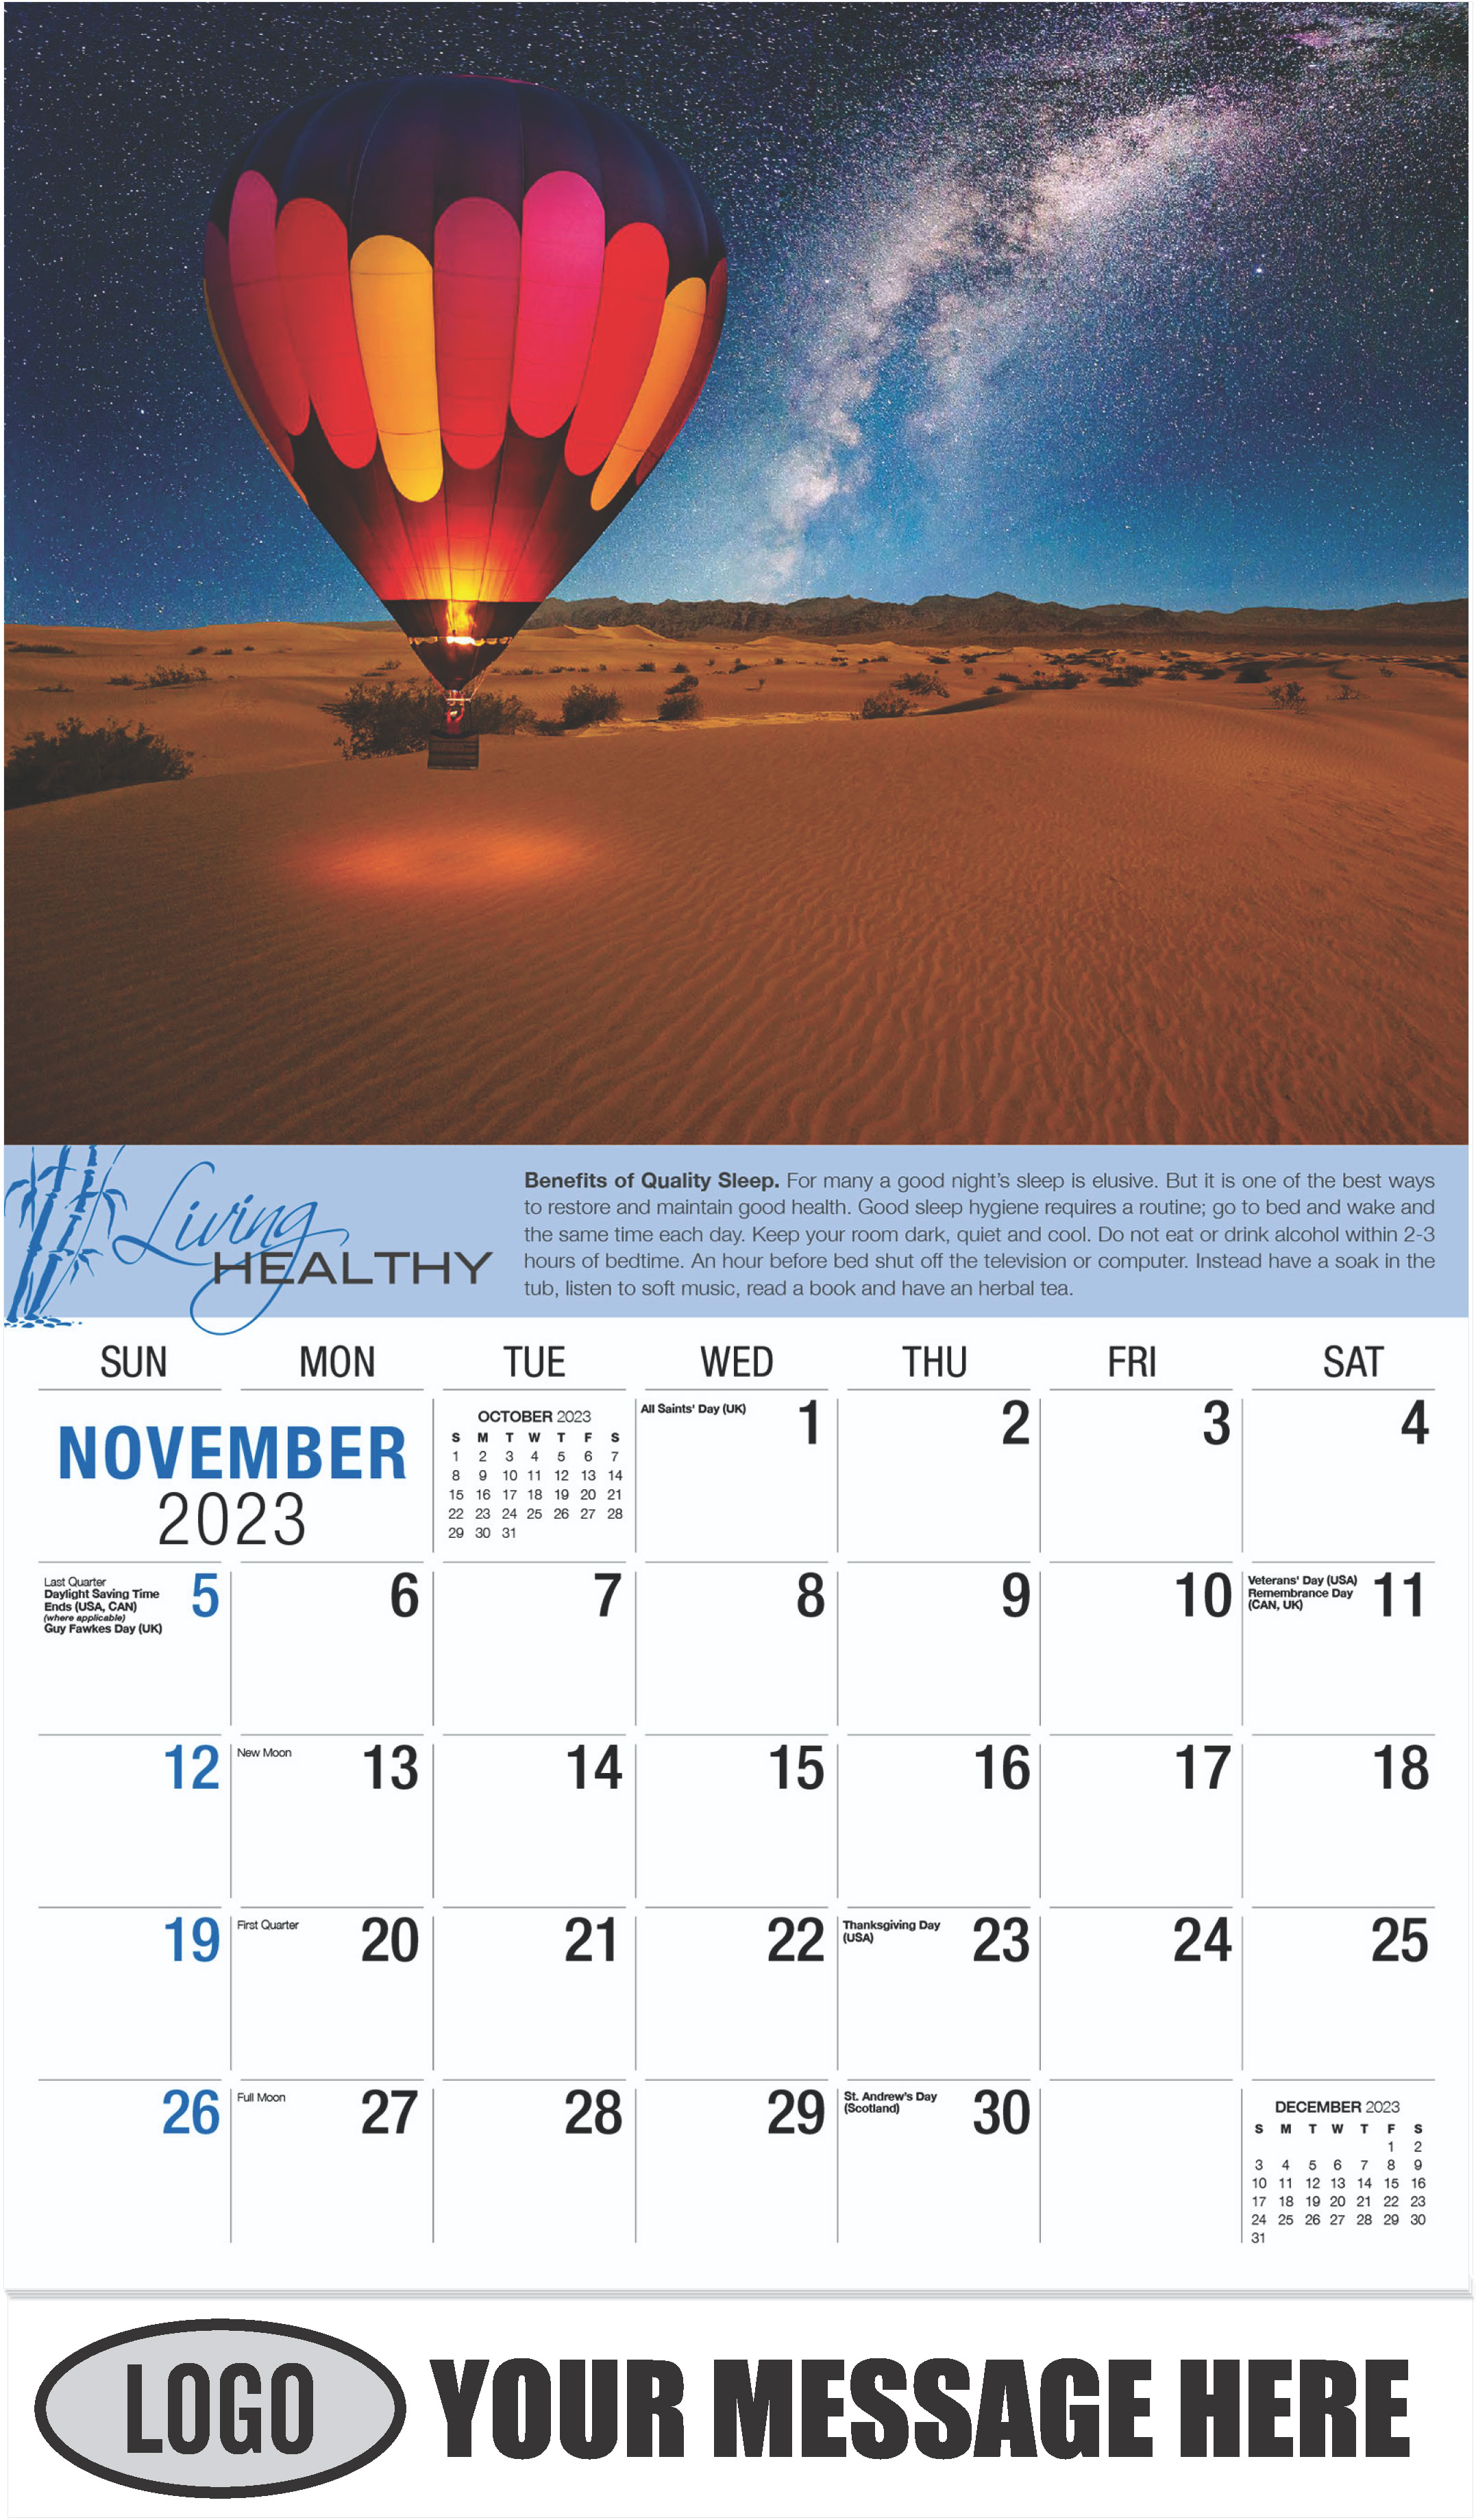 Majestic Hot Air Balloon - November - Living Healthy 2023 Promotional Calendar